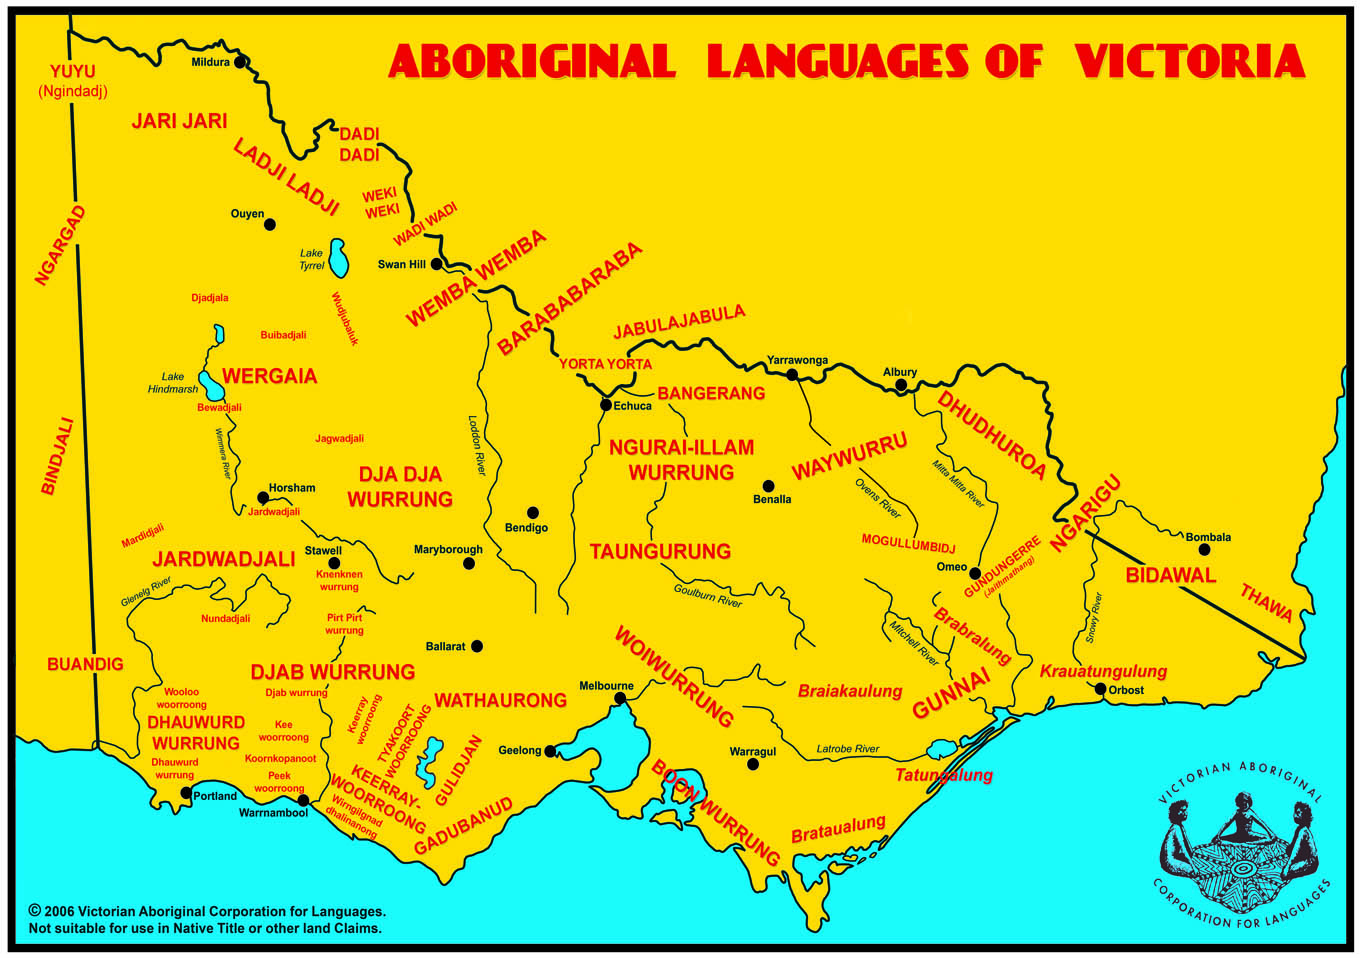 Victorian Aboriginal Corporations for Languages Map